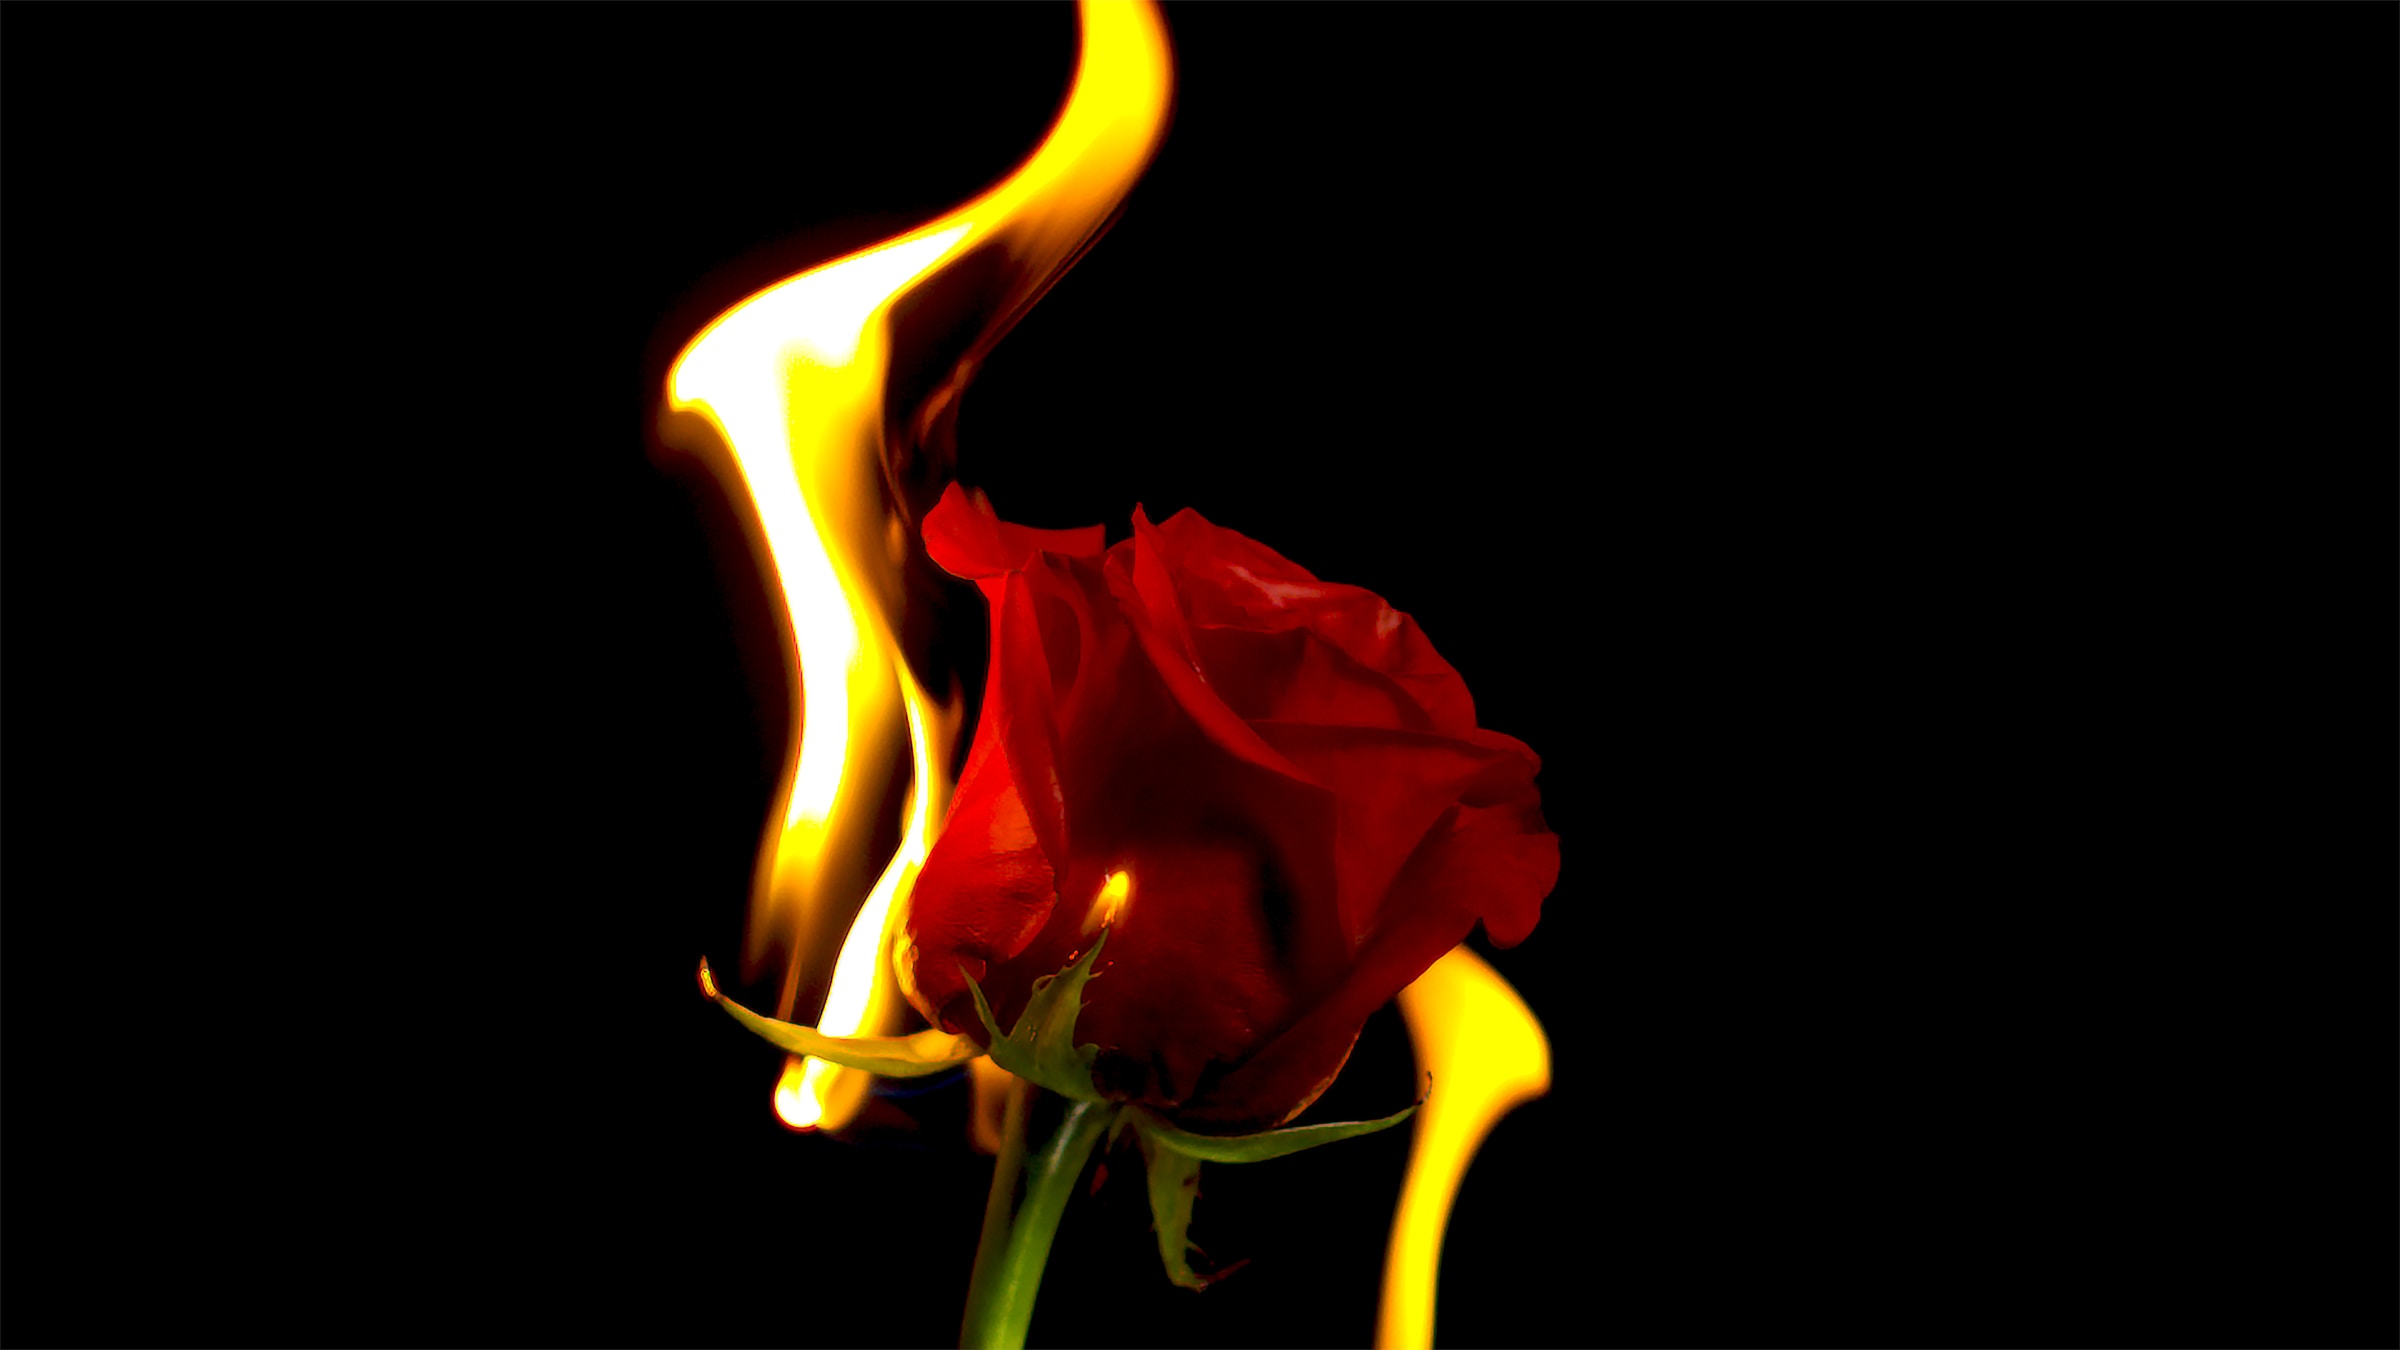 A rose on fire. | Source: Unsplash